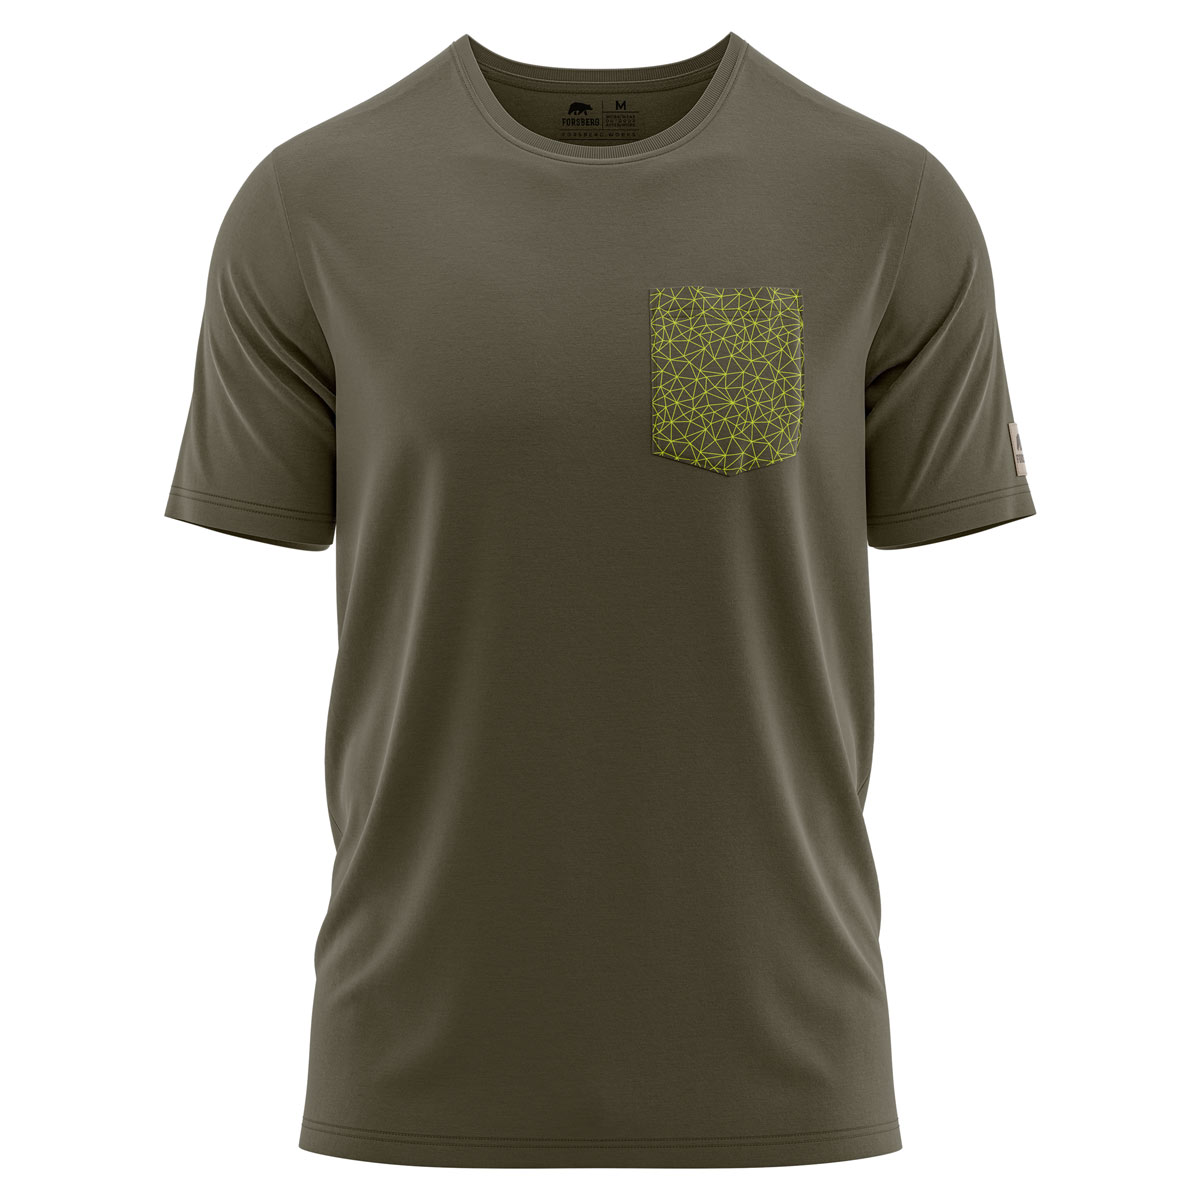 FORSBERG T-shirt met borstzak in polygoon-design